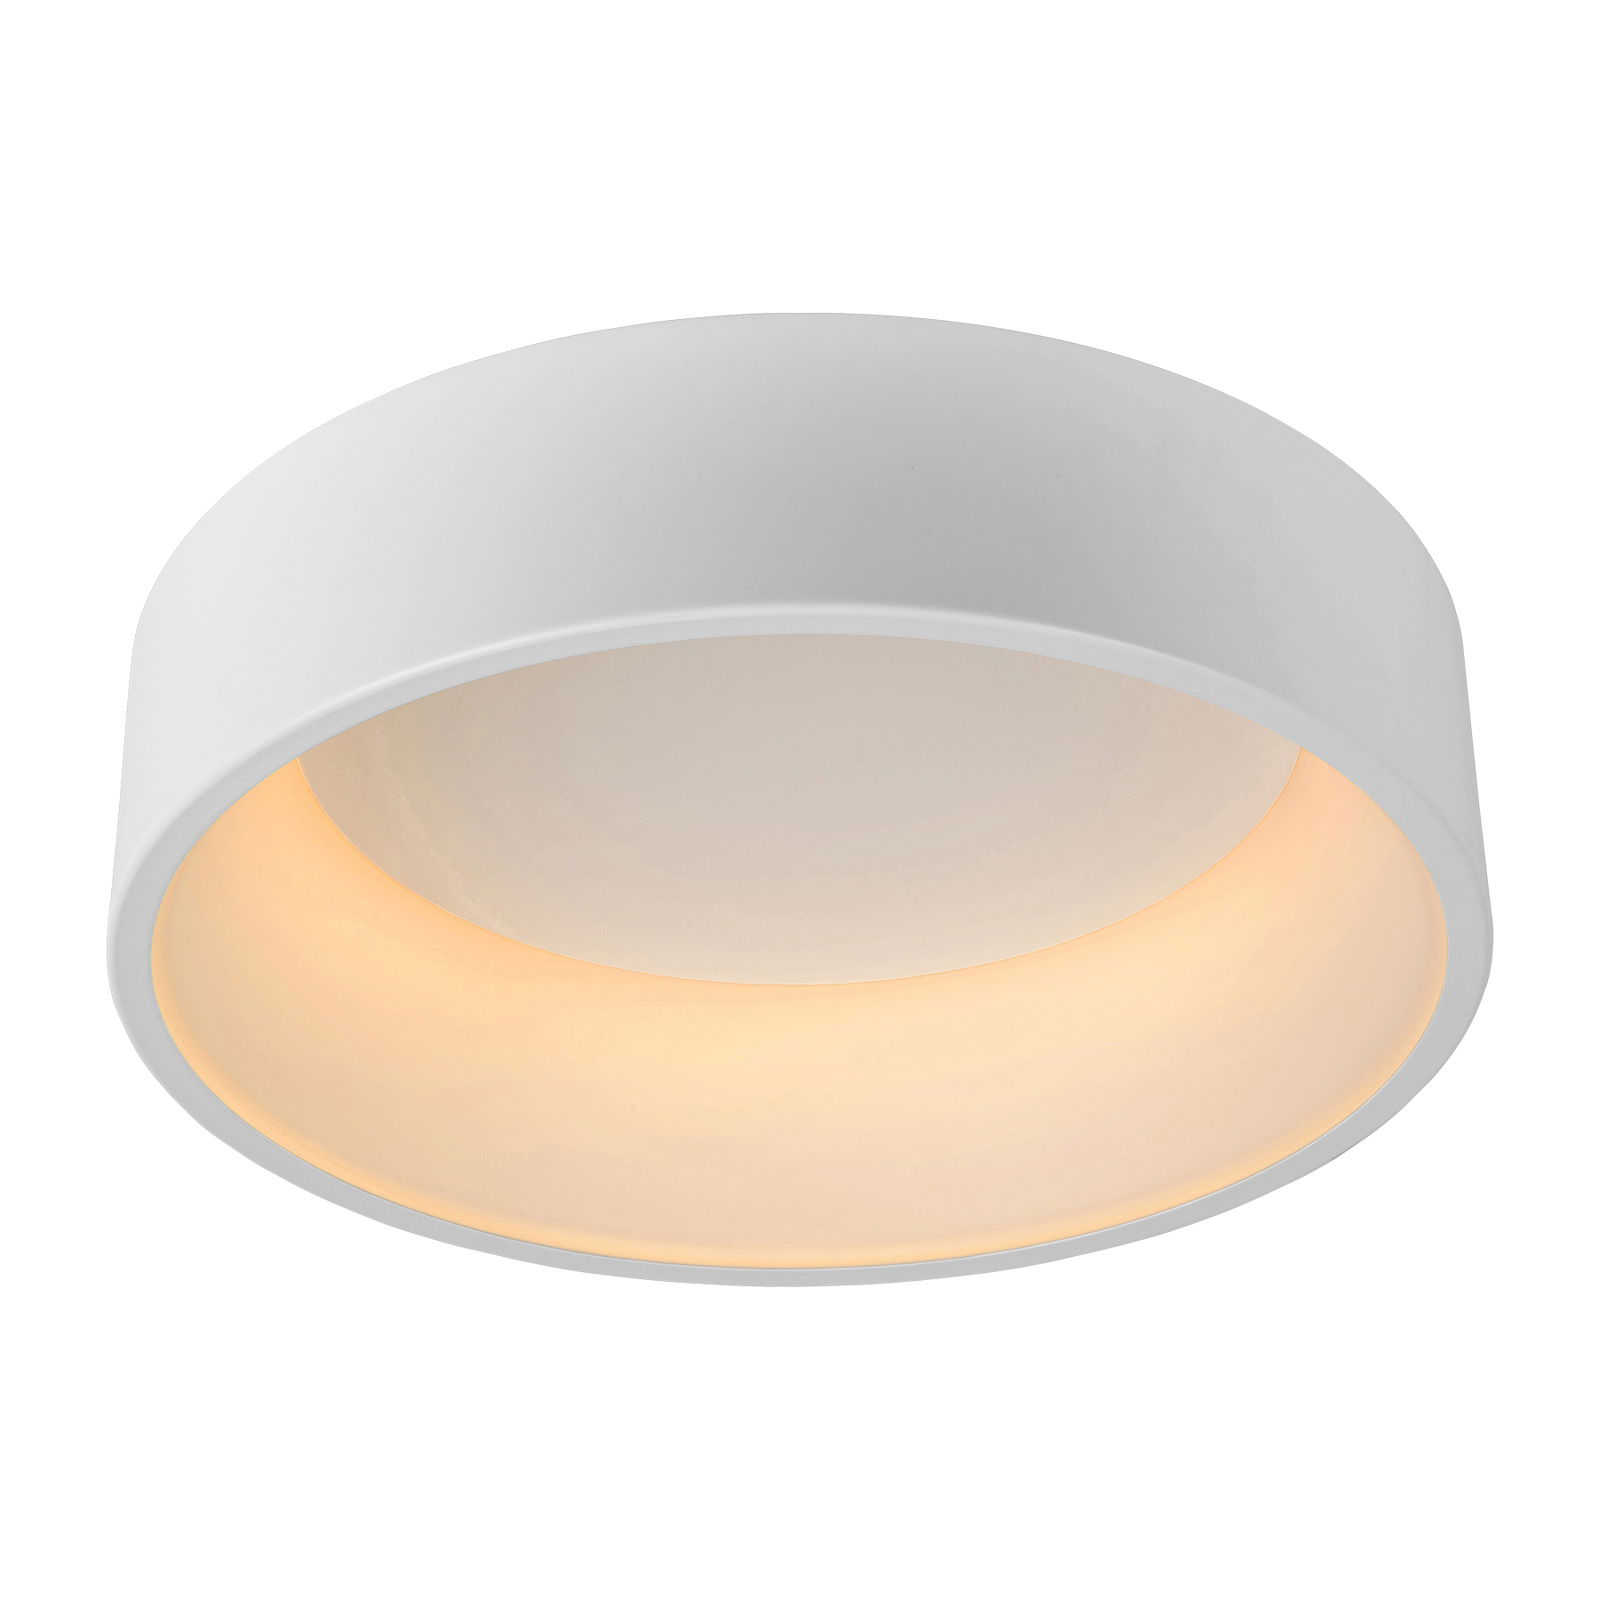 LED plafondlamp Talowe, wit, Ø 45 cm